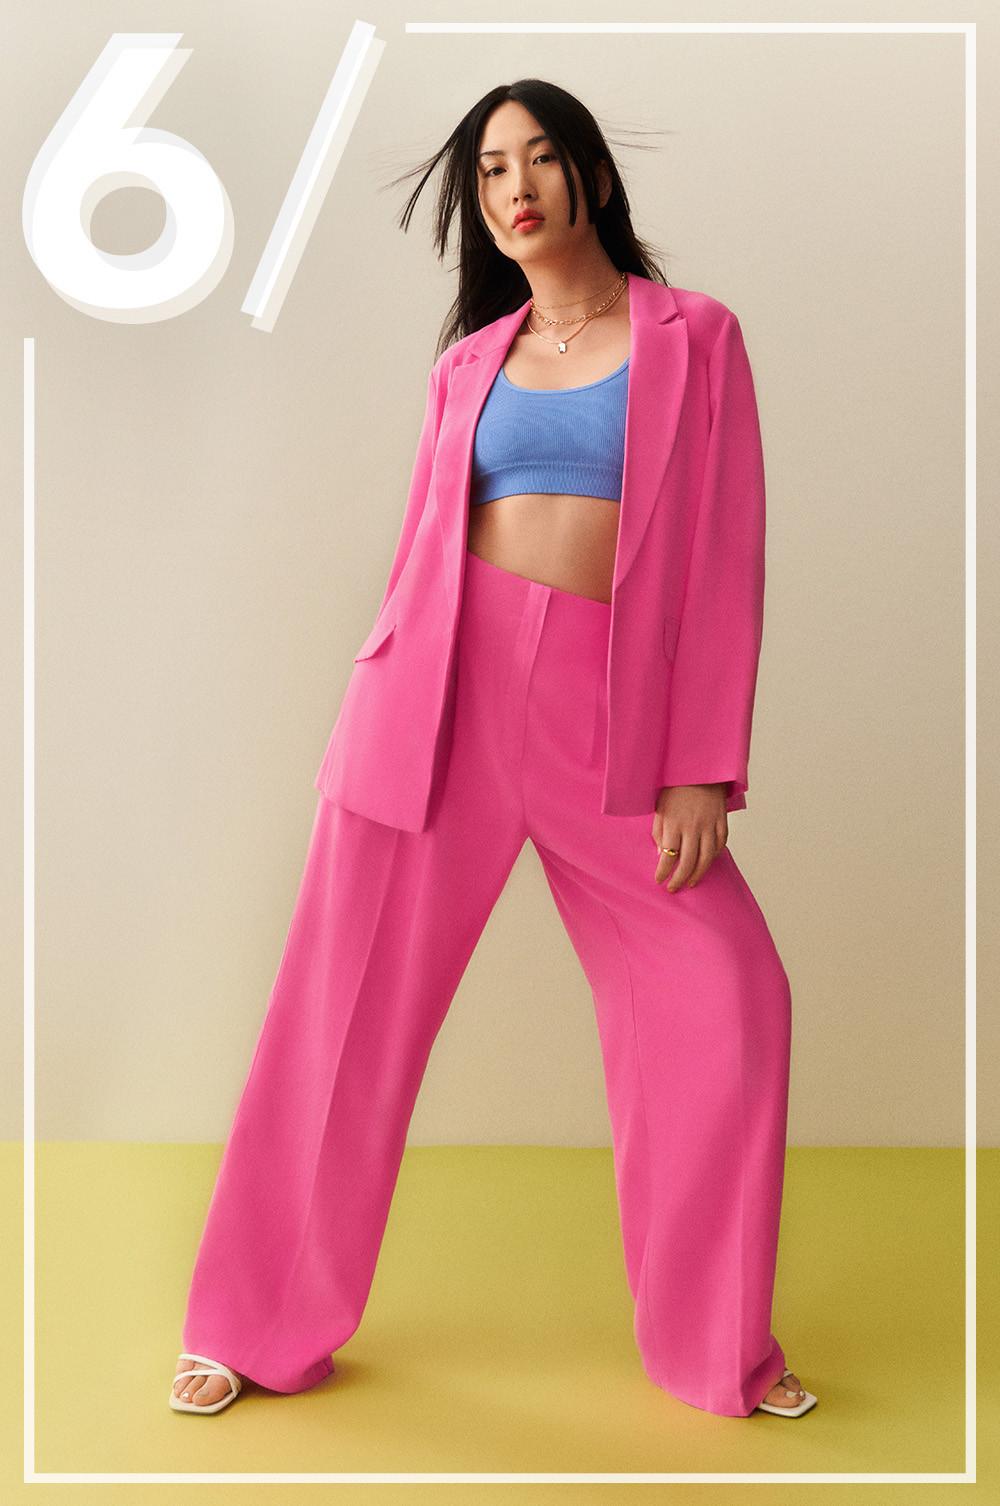 Model wearing pink suit